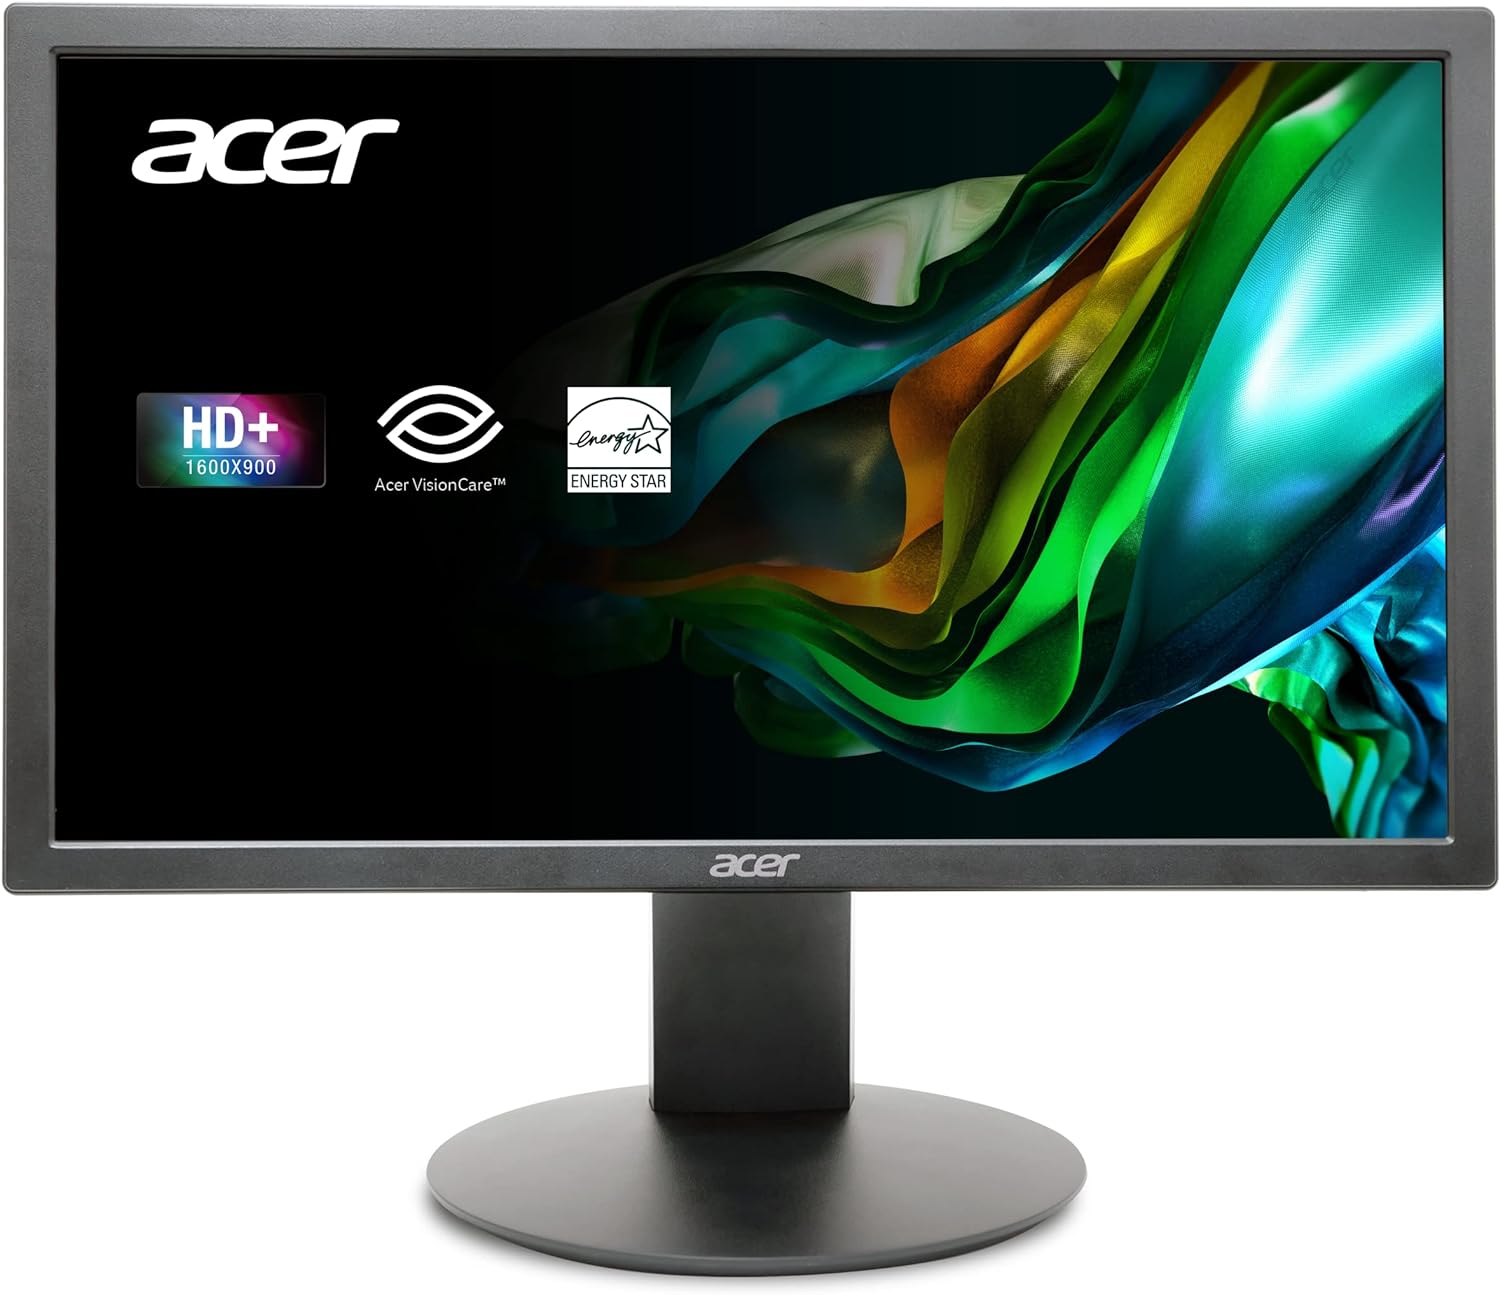 Acer K202Q bi 195inch Professional HD 1600 x 900 Monito - Alaska - Anchorage ID1540971